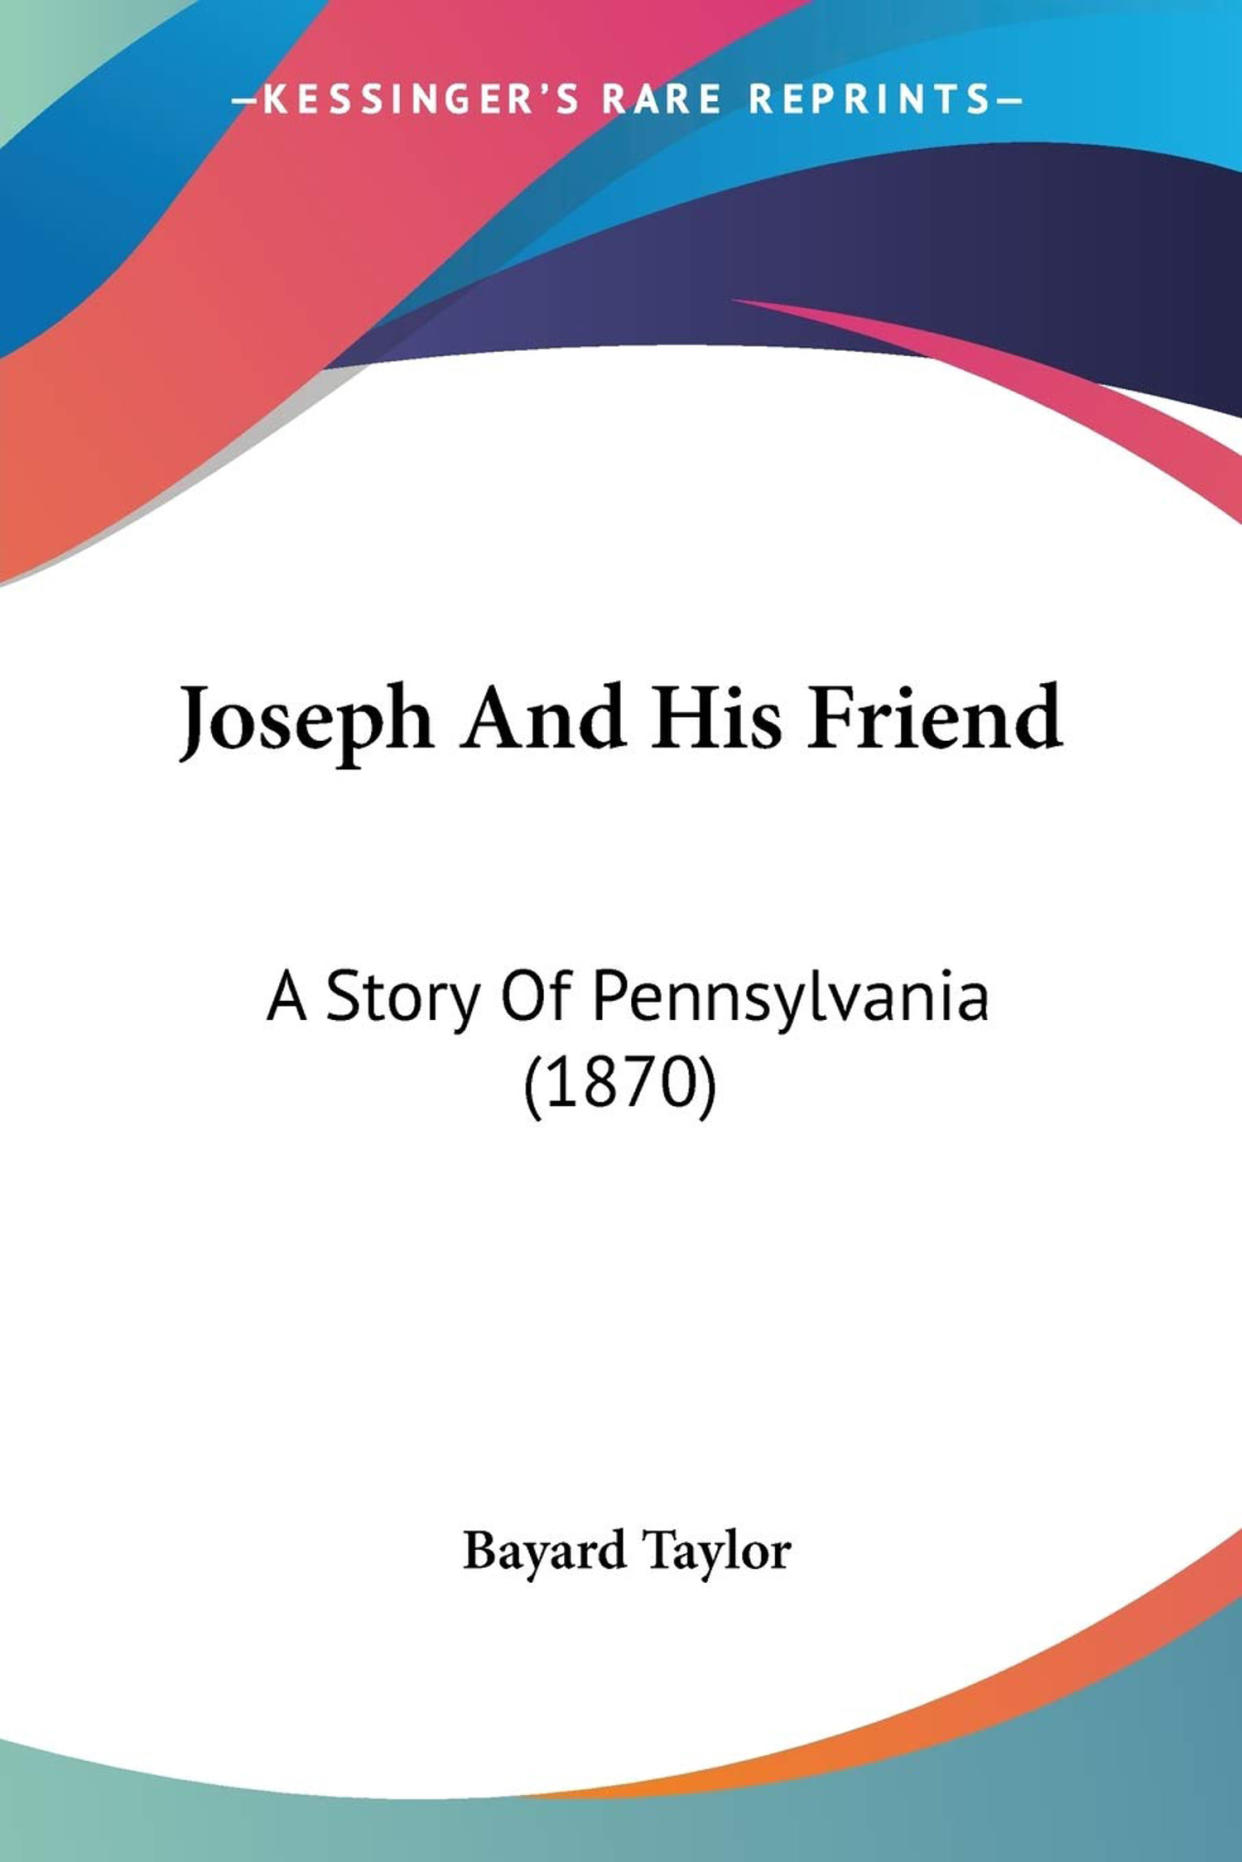 a story of Pennsylvania book cover (Courtesy Amazon)